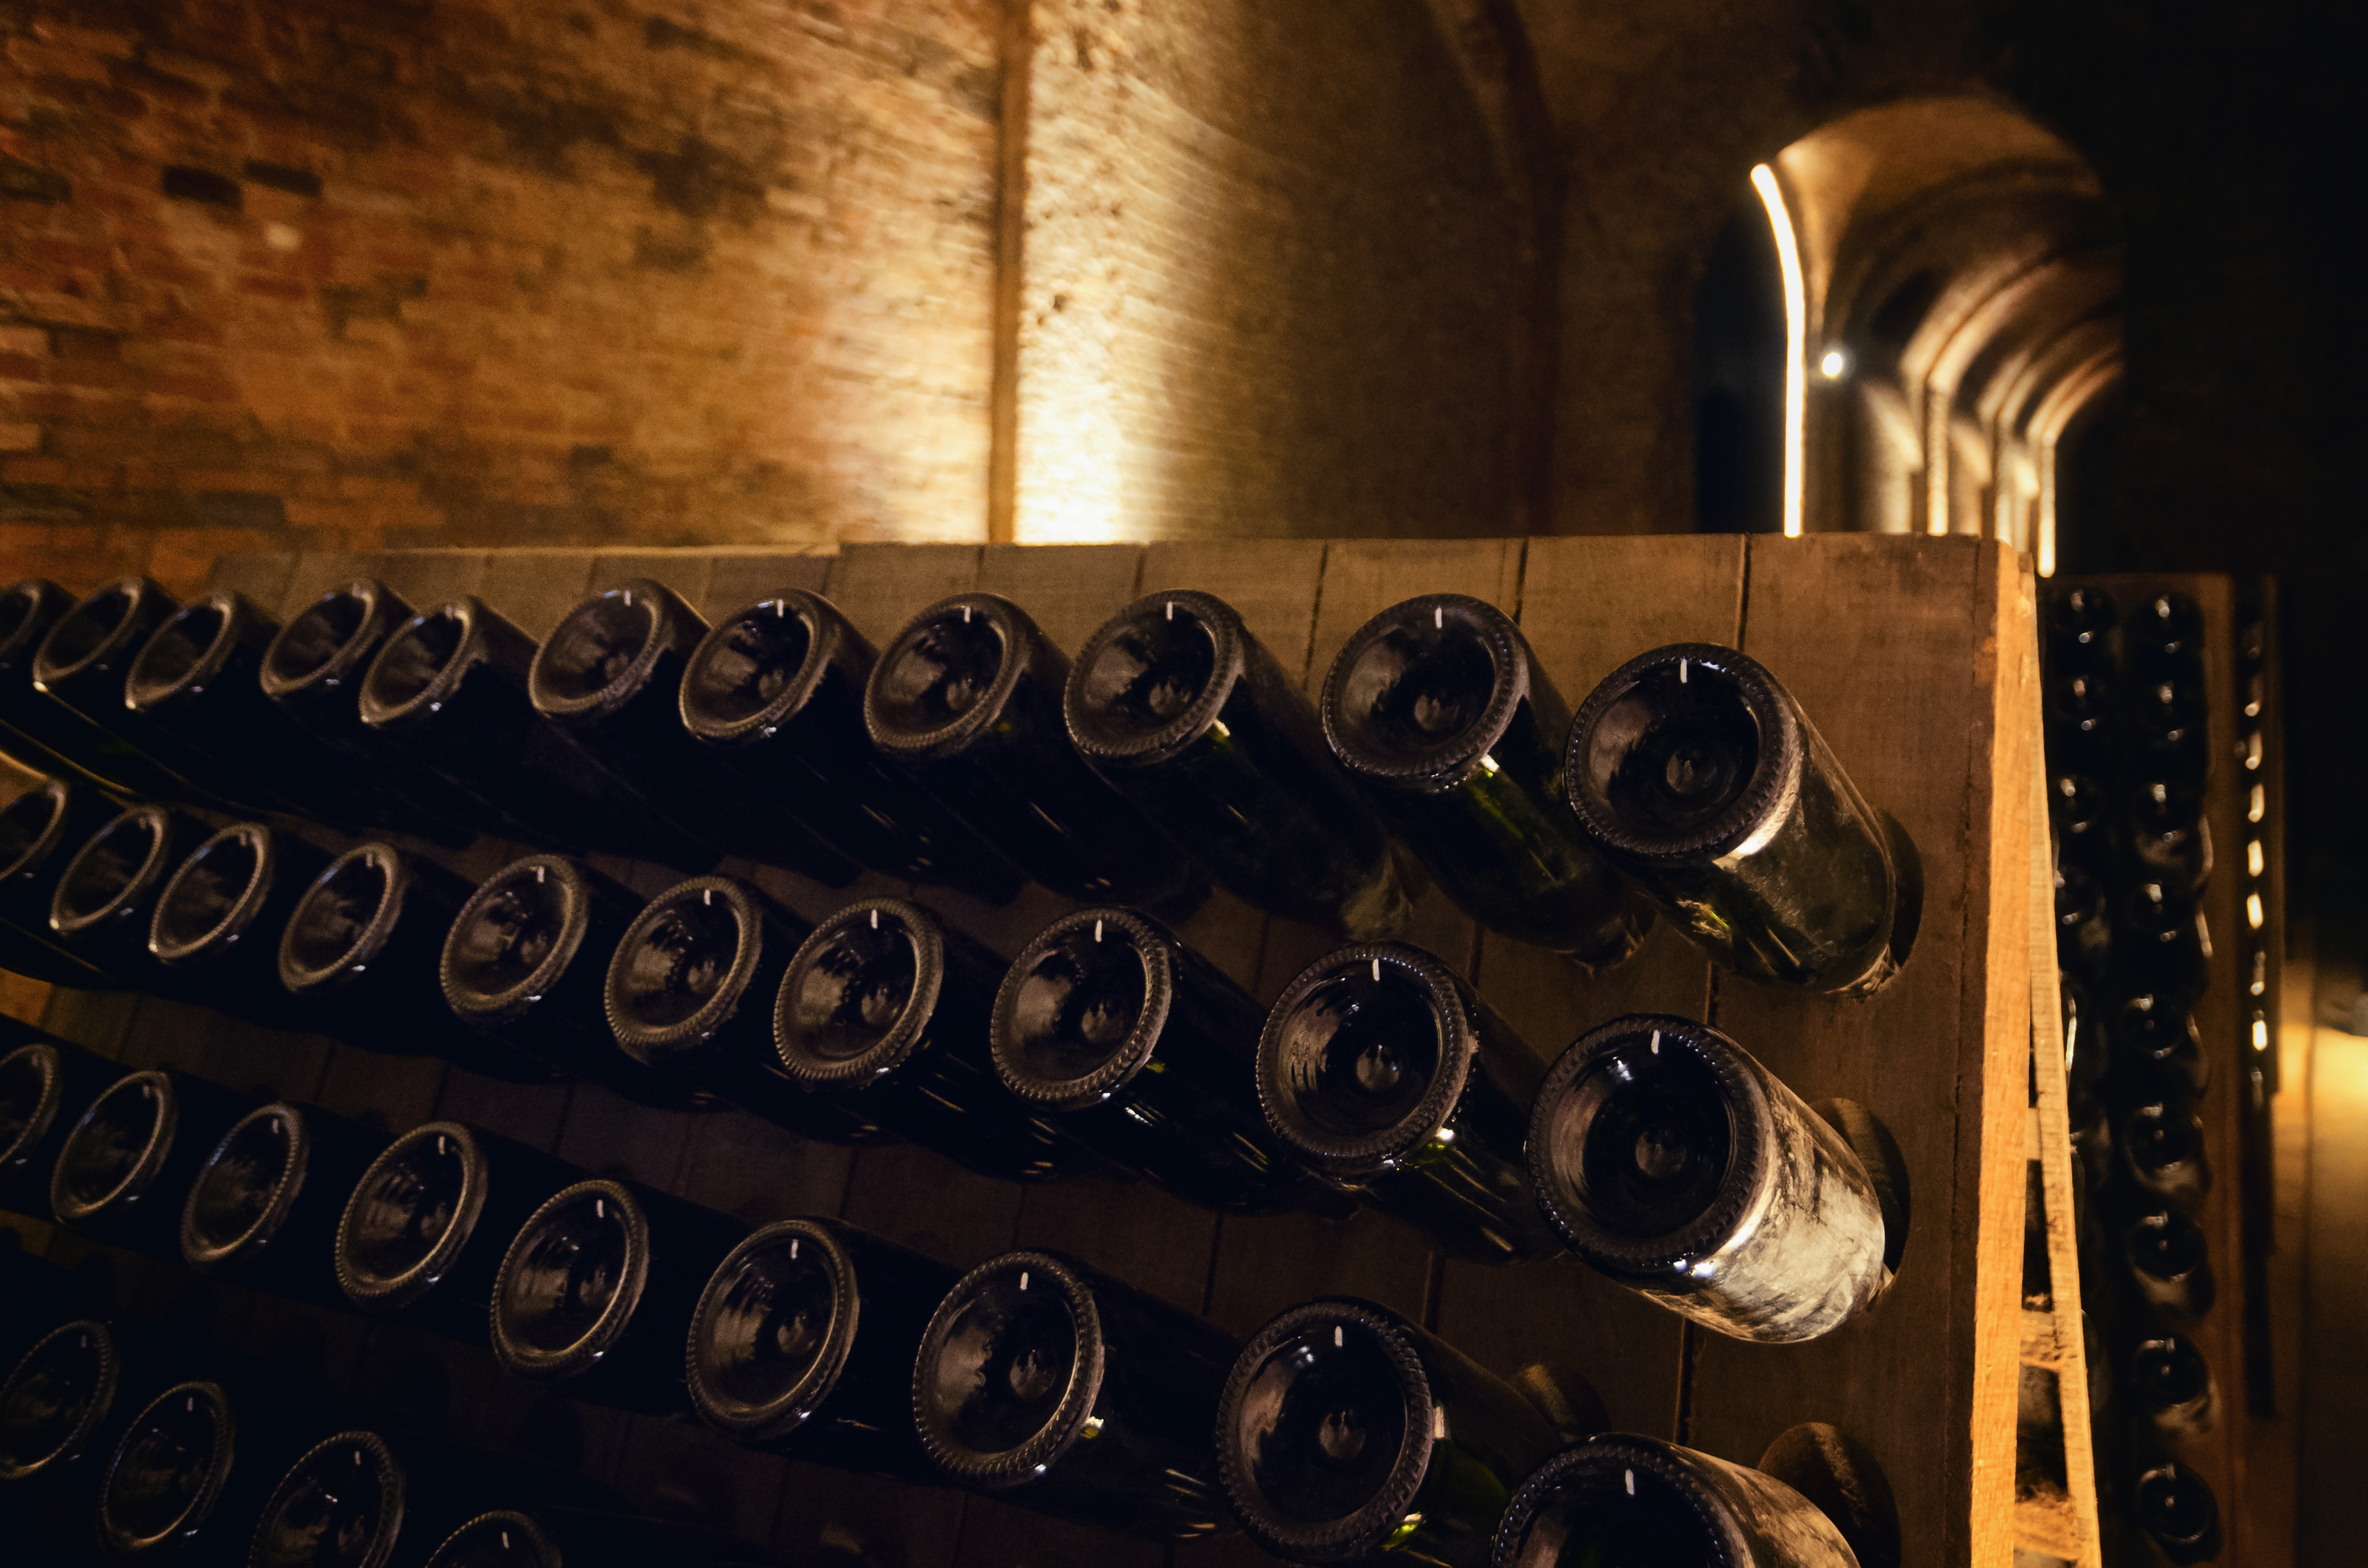 Pupitre and wine bottles inside an underground cellar